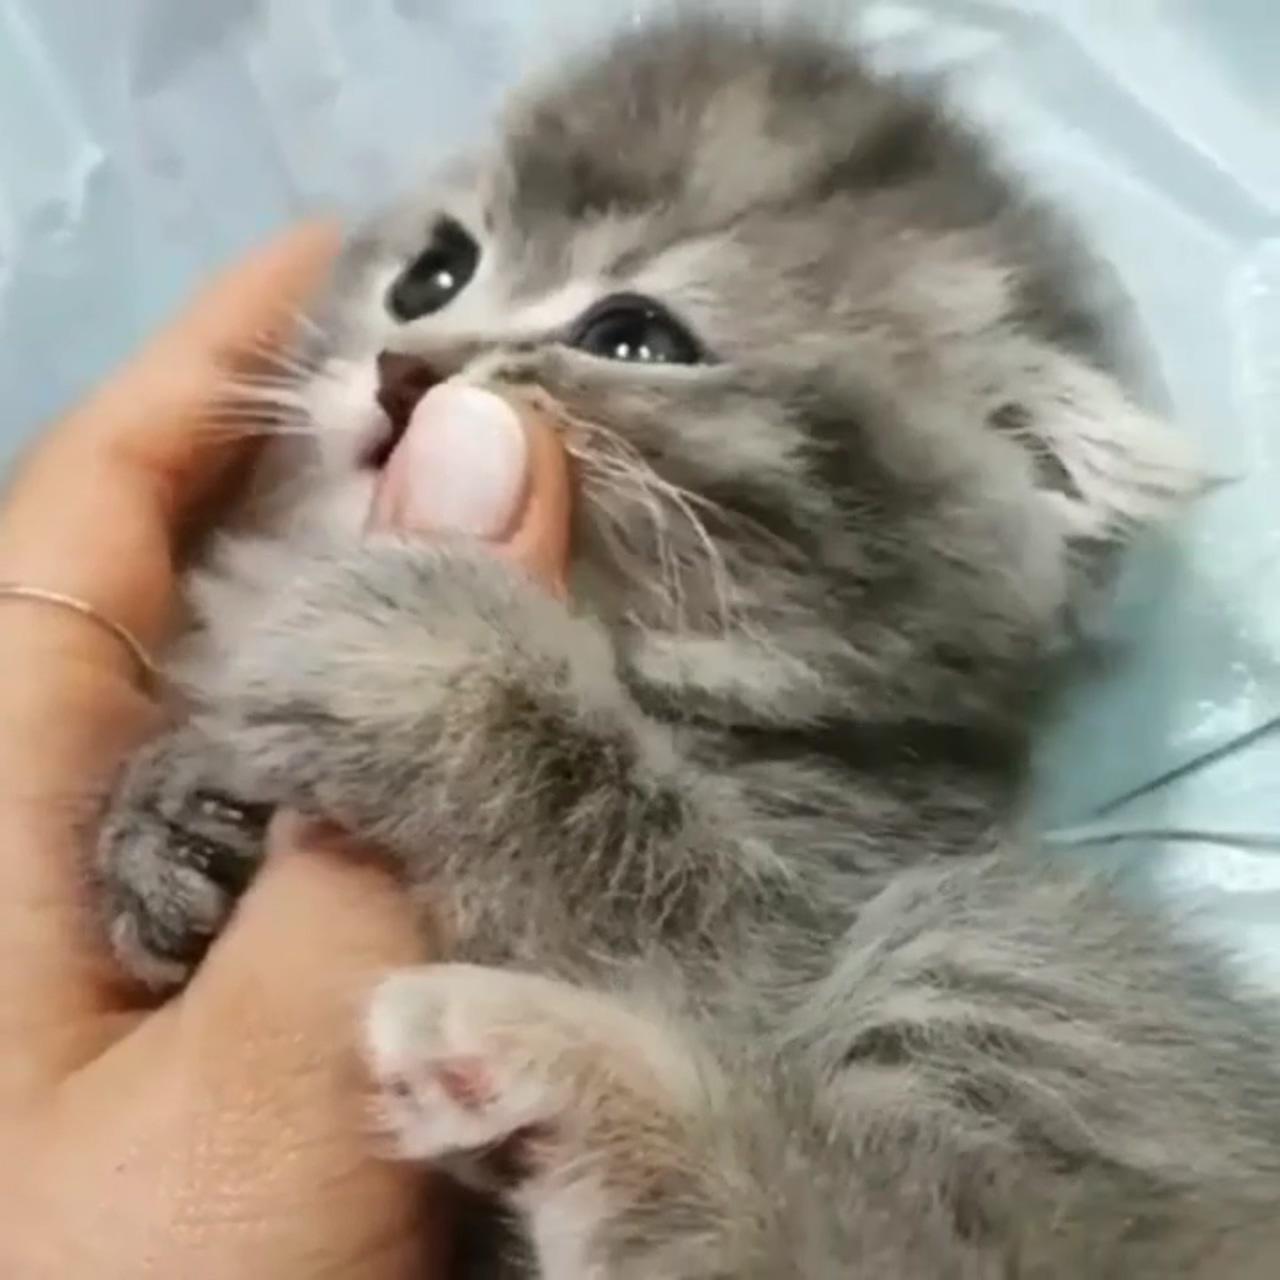 Cute little kittens; cute baby cats